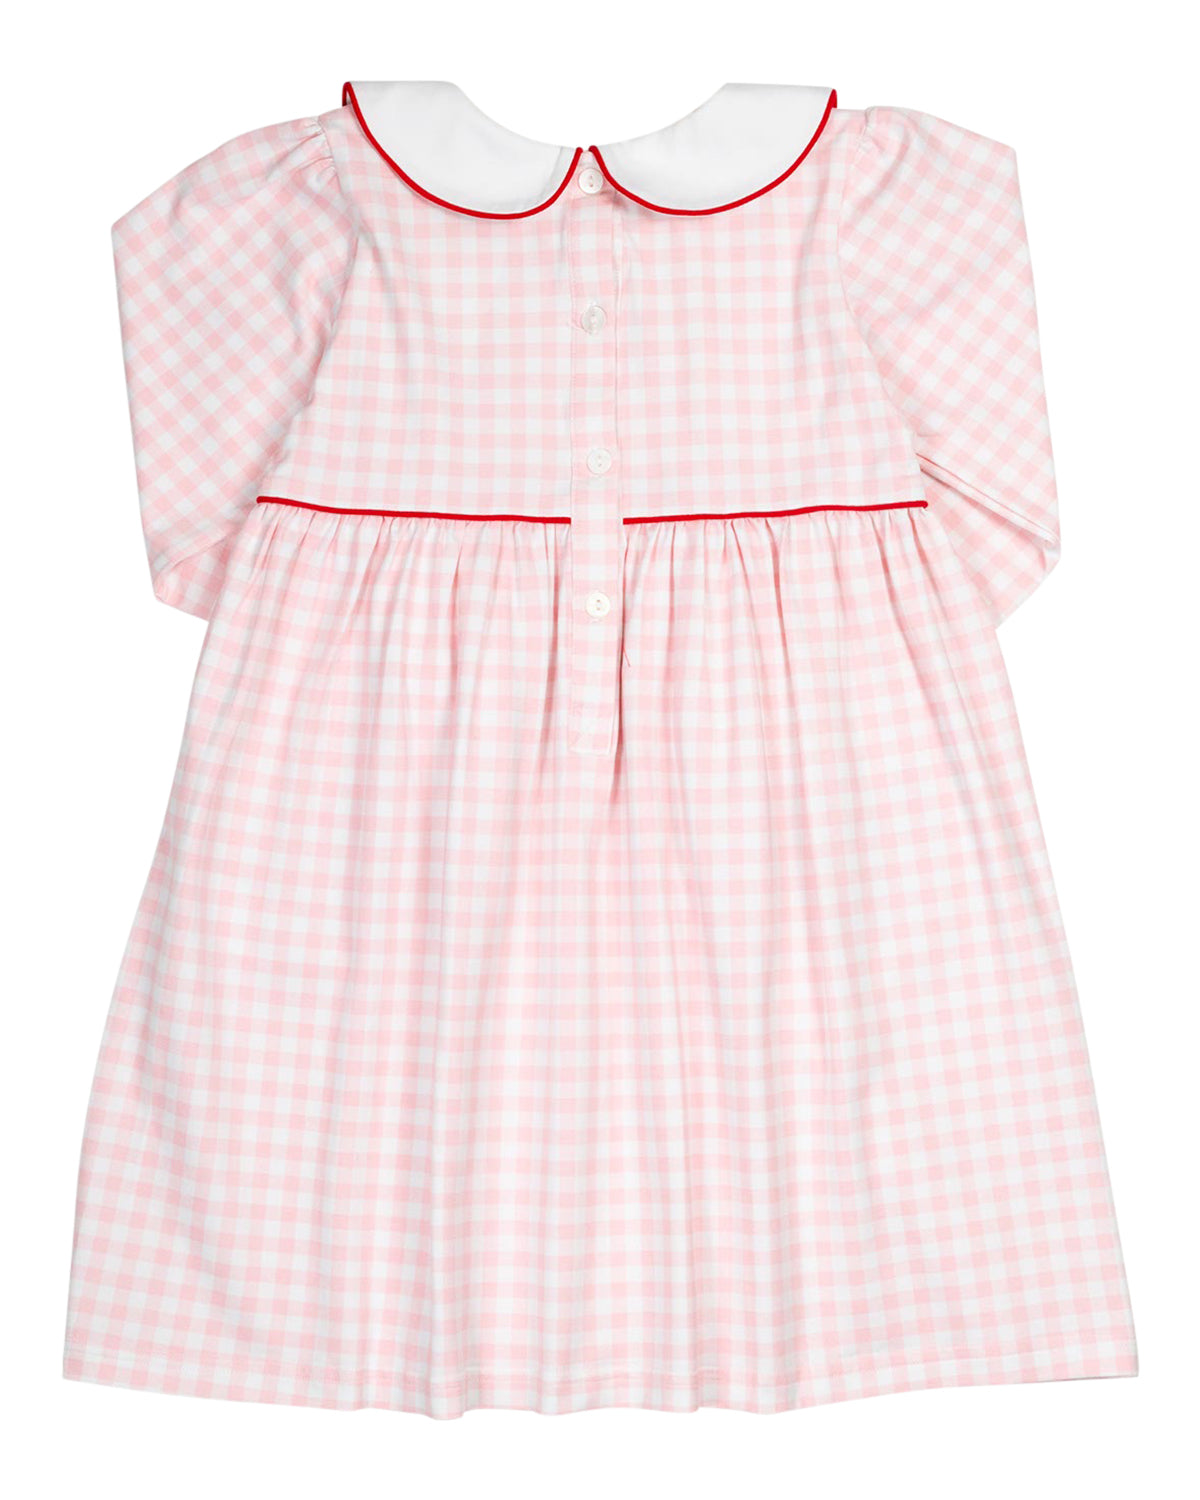 Heart Pockets Pink Gingham Knit Dress